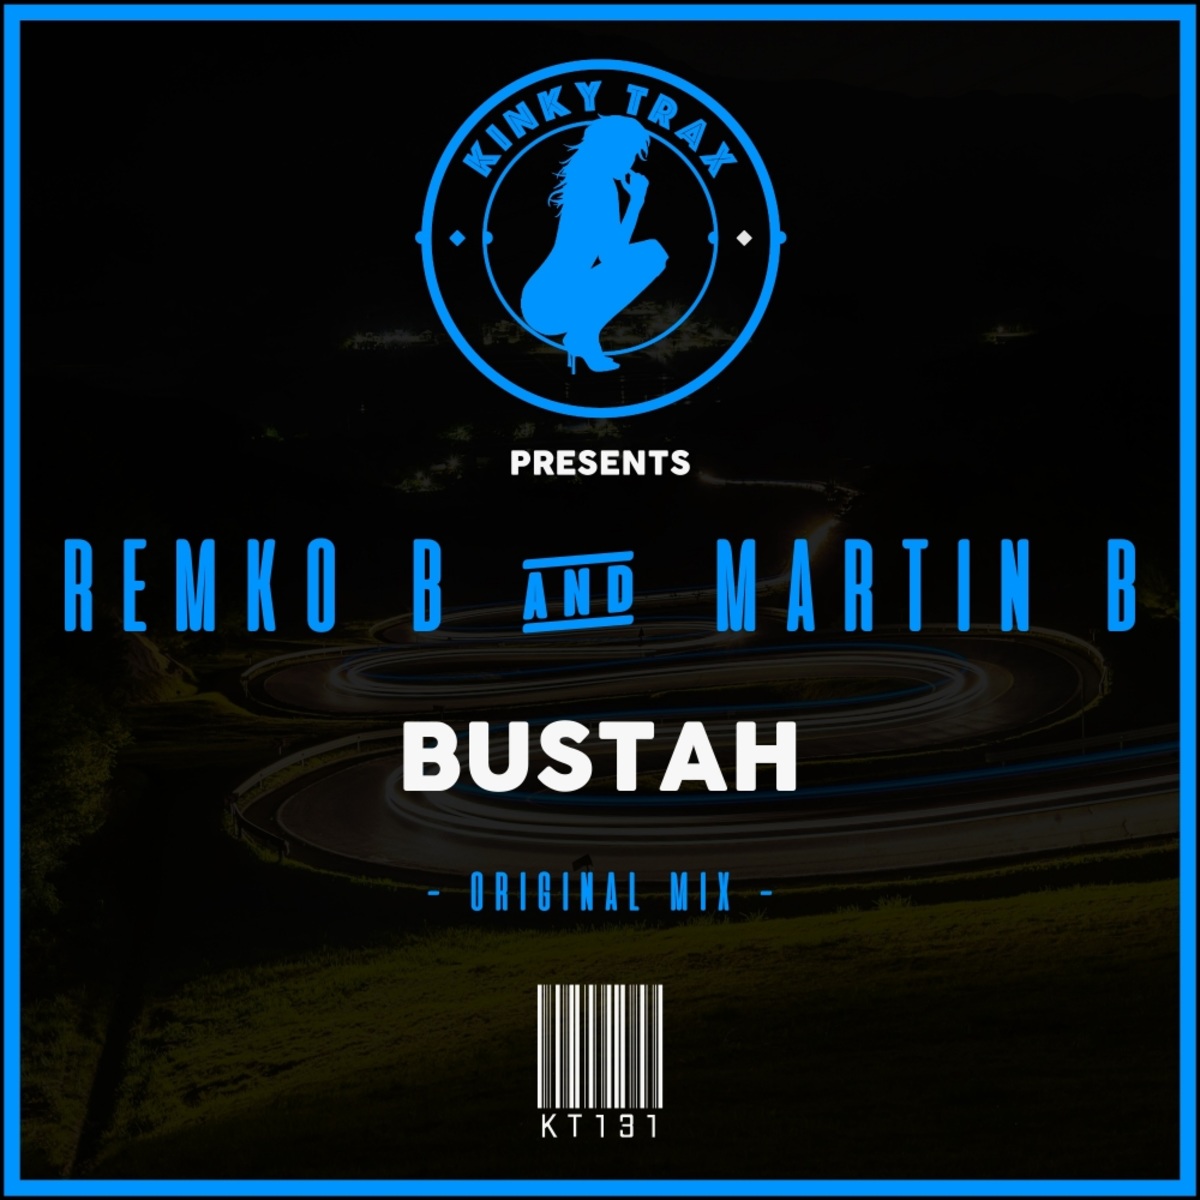 Remko B & Martin B - Bustah / Kinky Trax